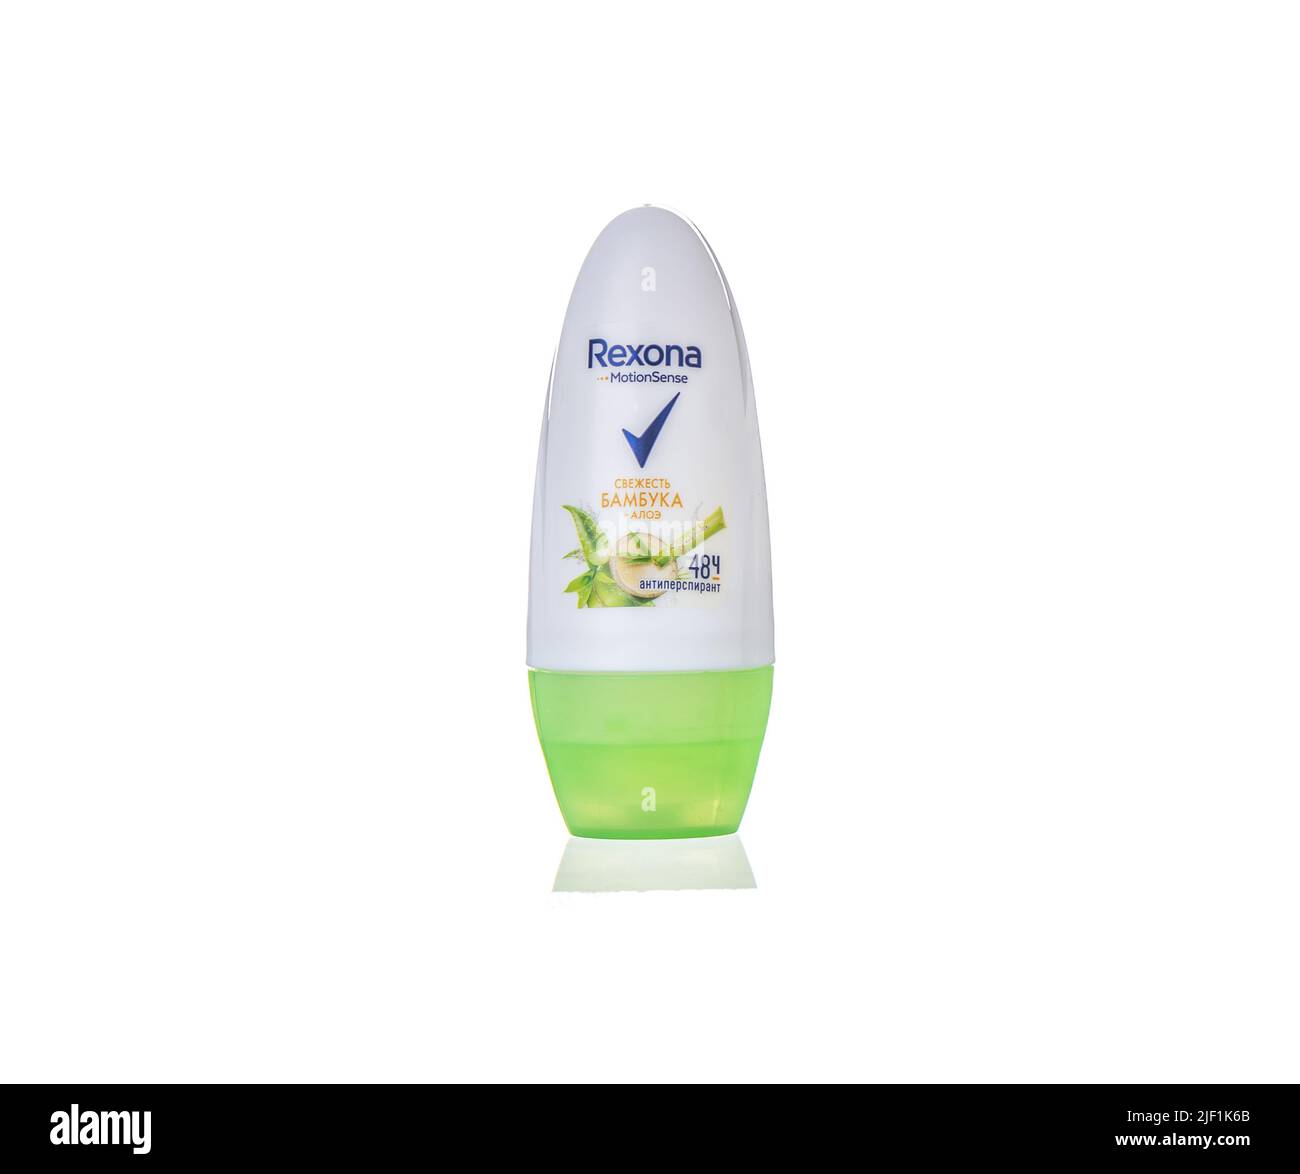 Echo refreshes deodorant giant Rexona across UK and US markets